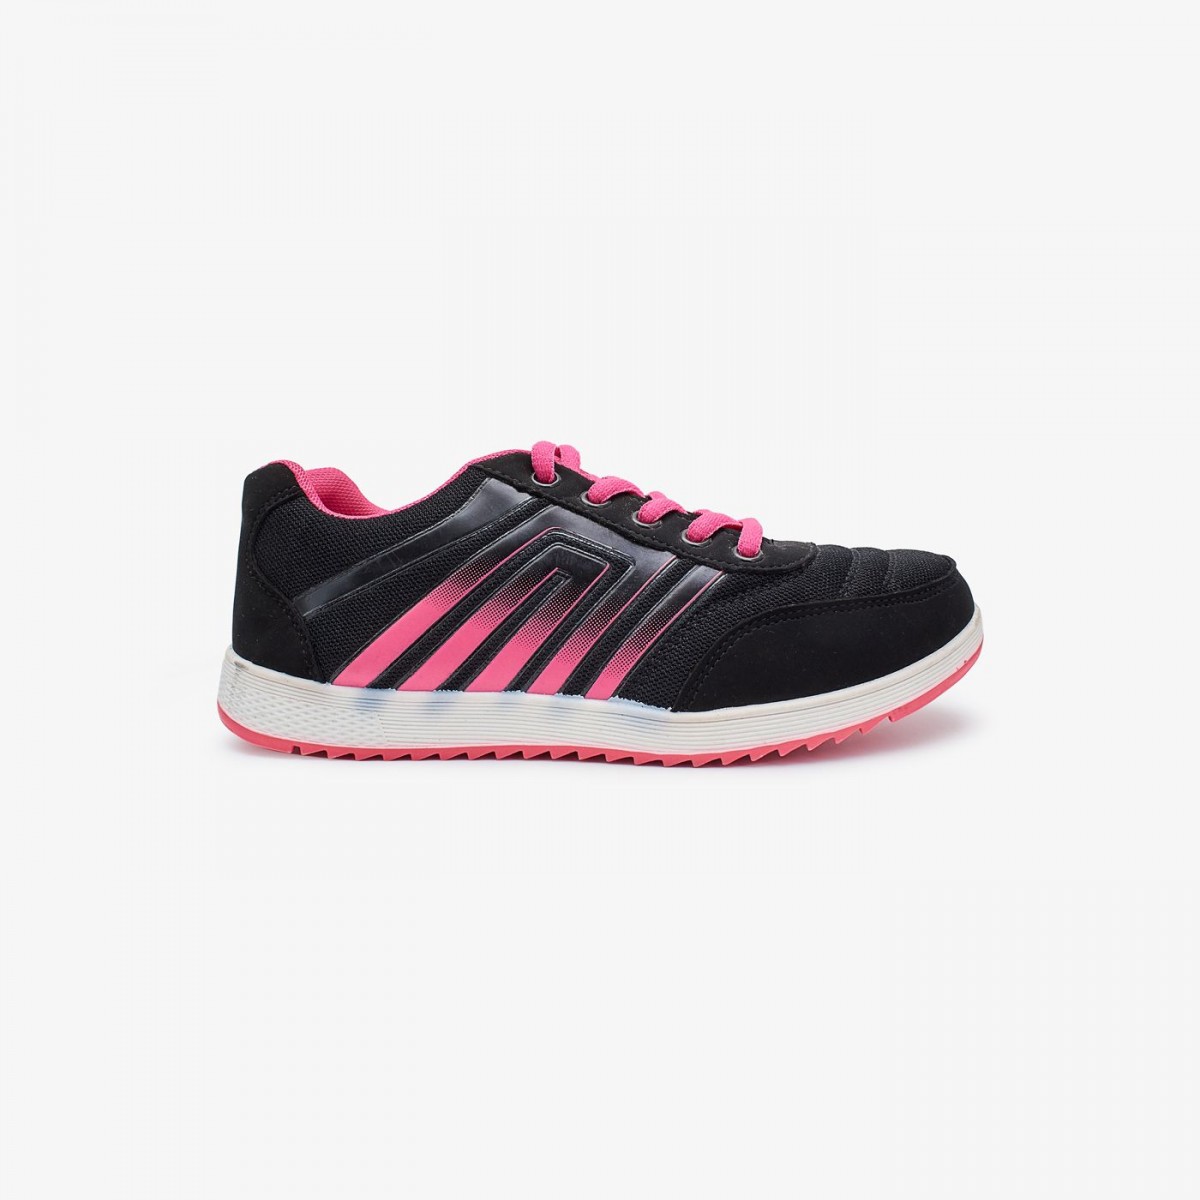 /2019/08/liza-women-running-shoes-lz-zs-0003-blk-fsh-image2.jpeg